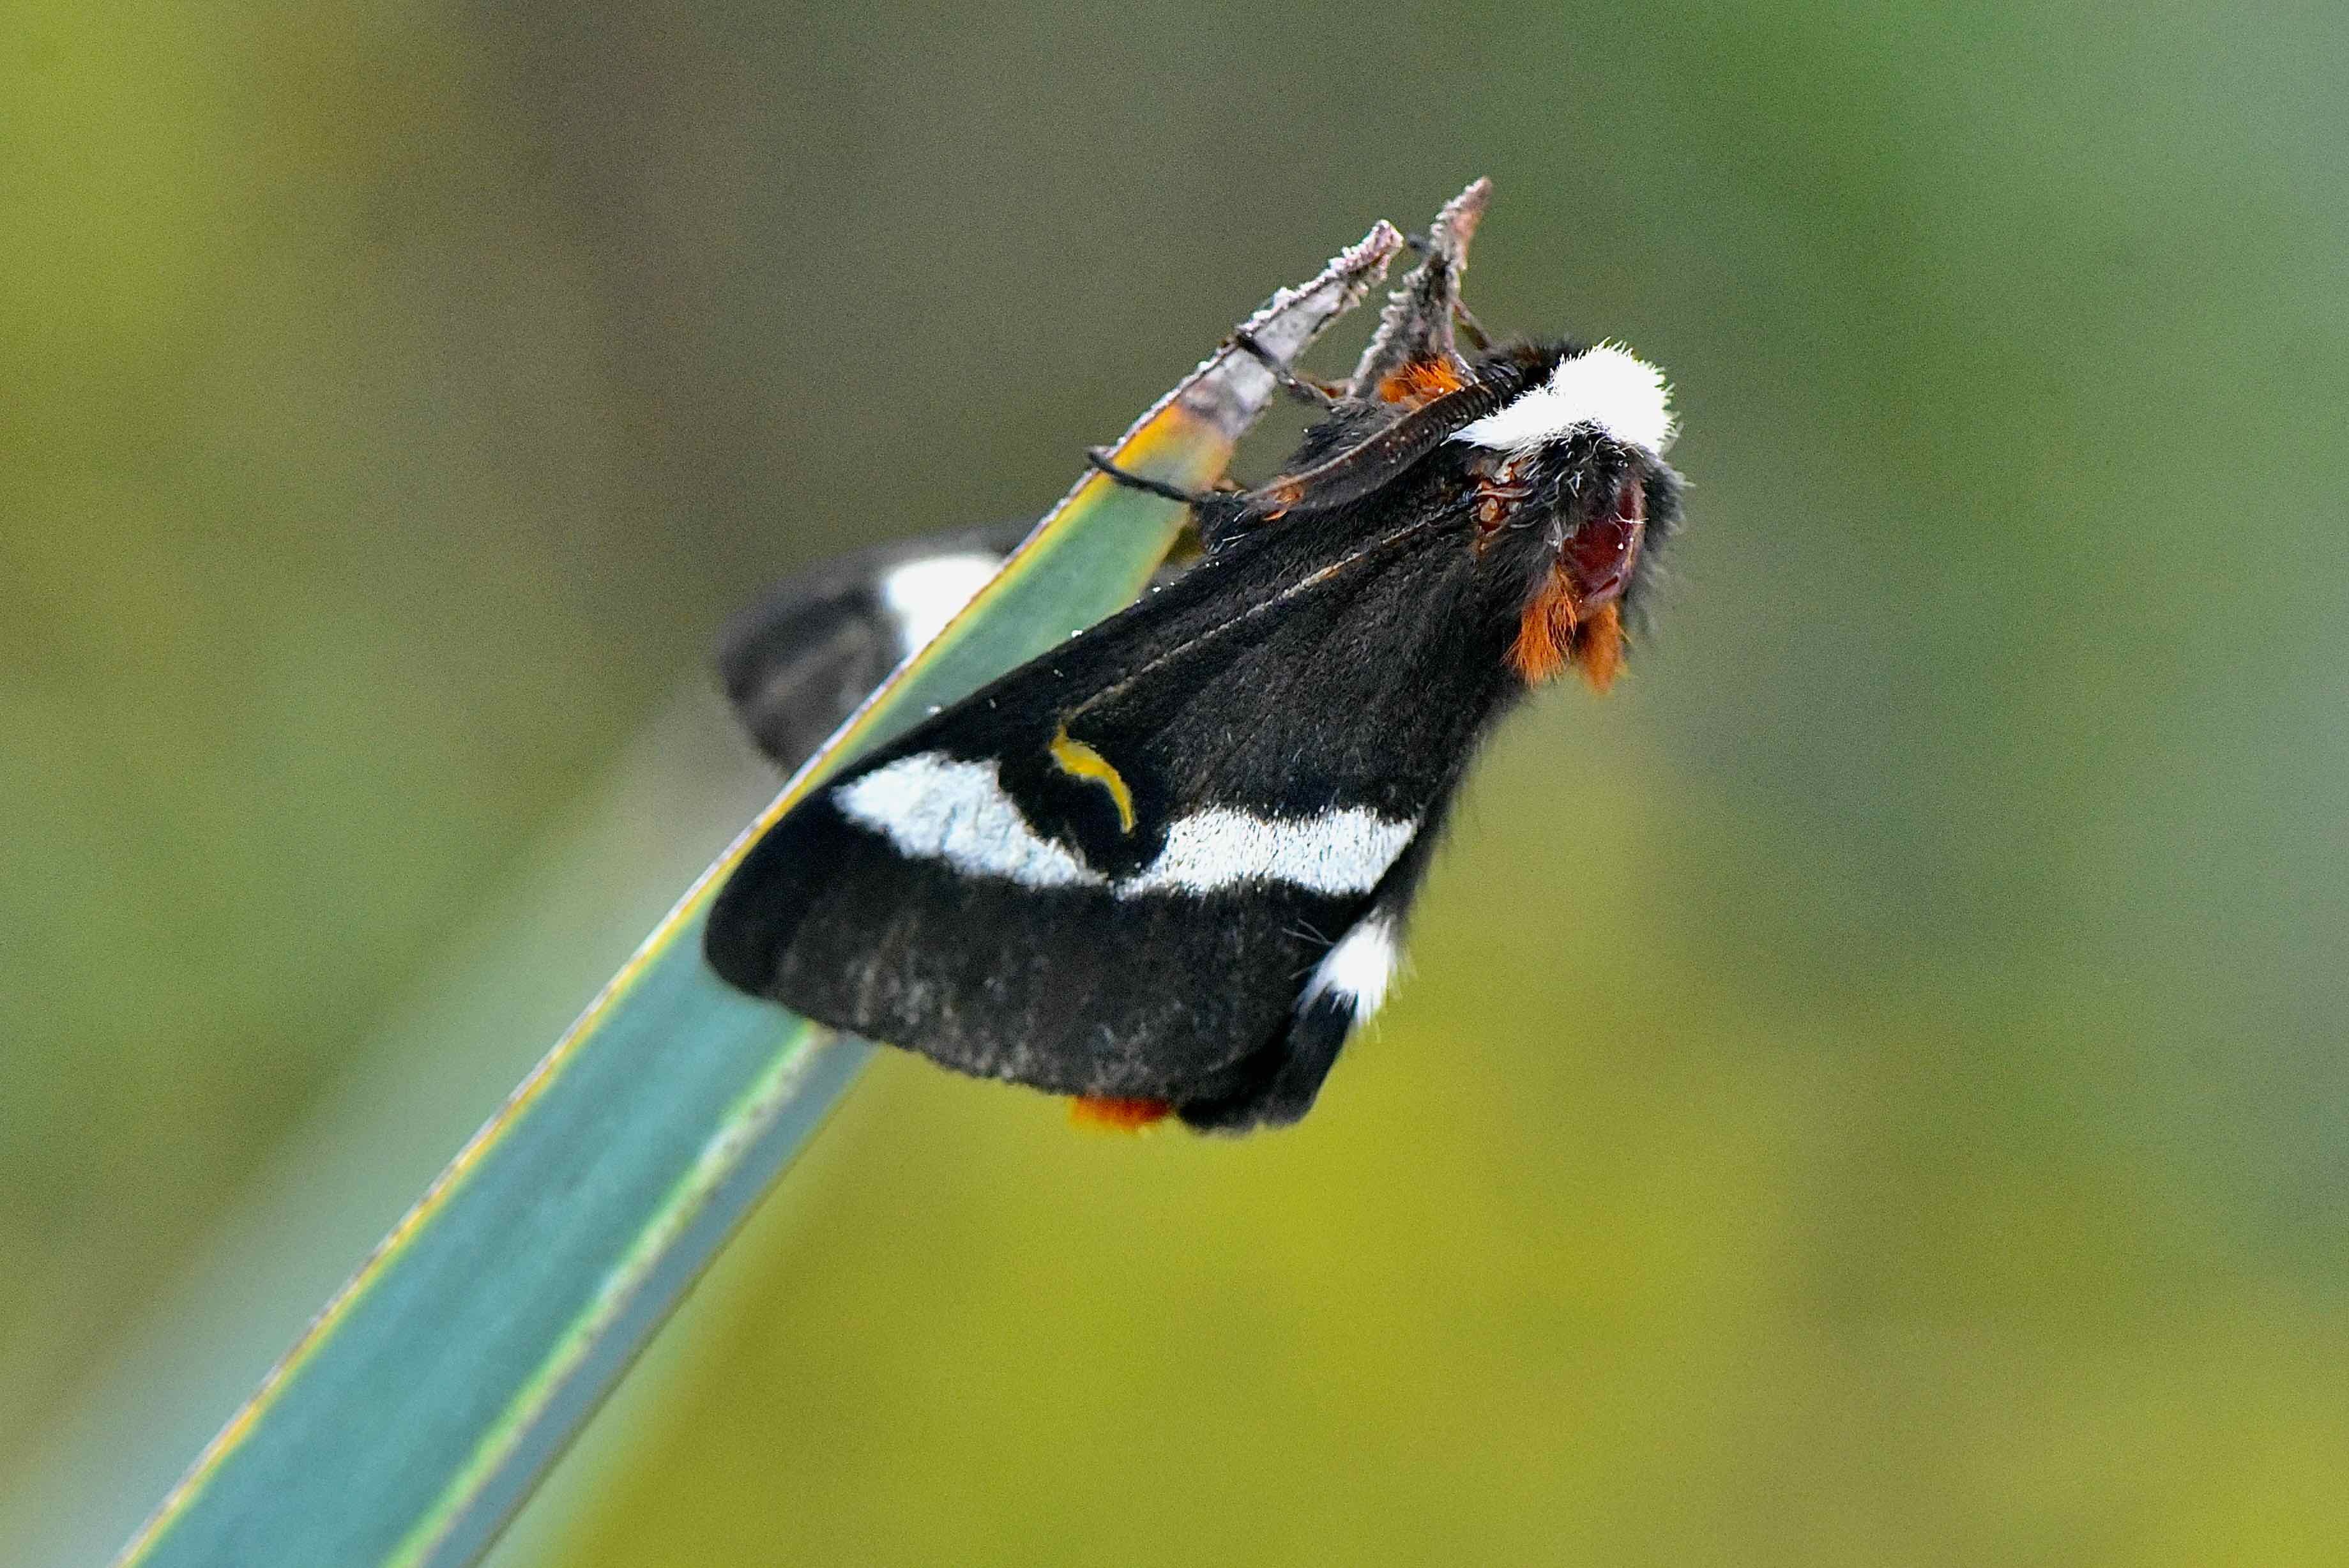 buck moth